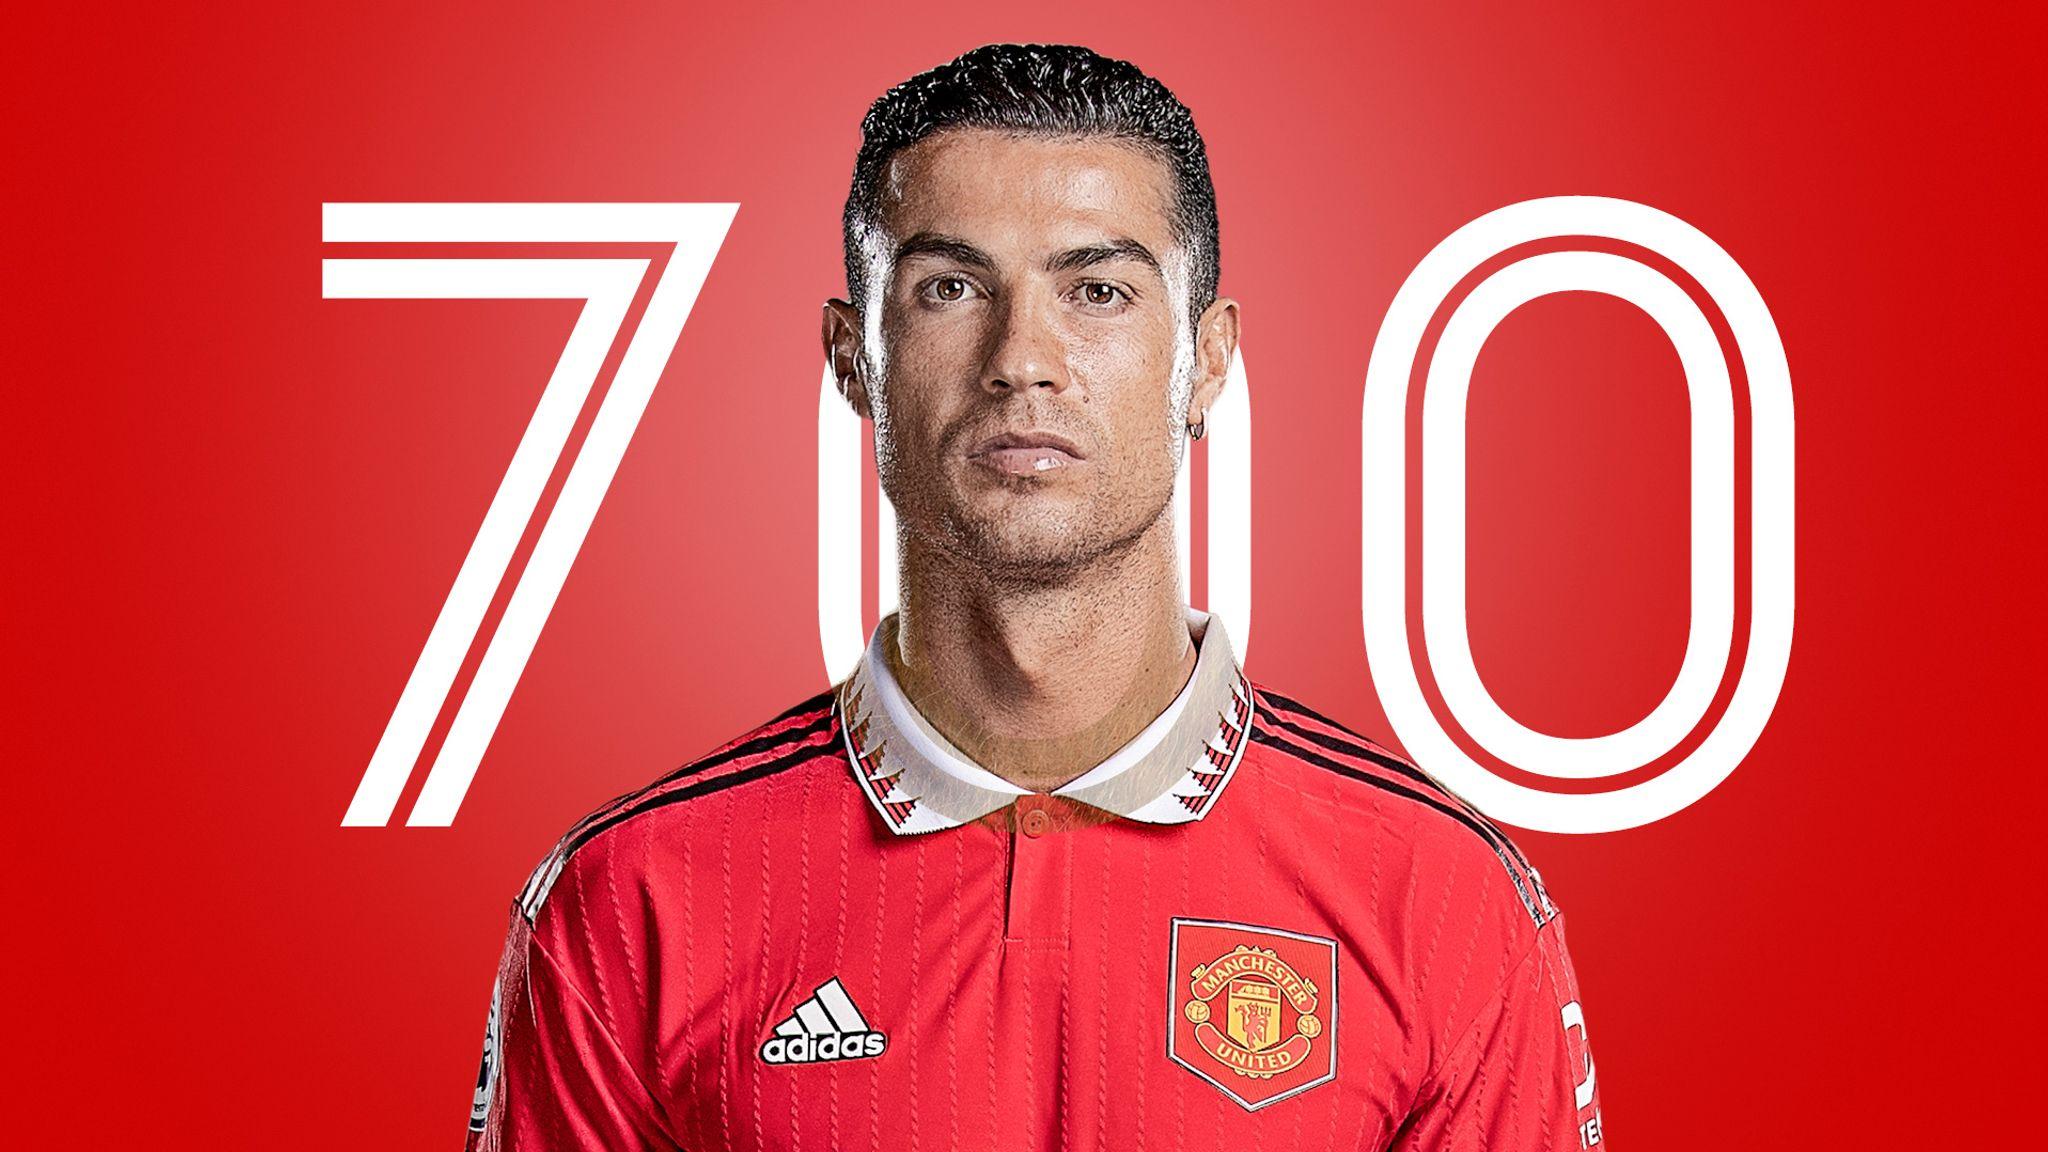 Cristiano Ronaldo reached record 700 club career goals_30.1